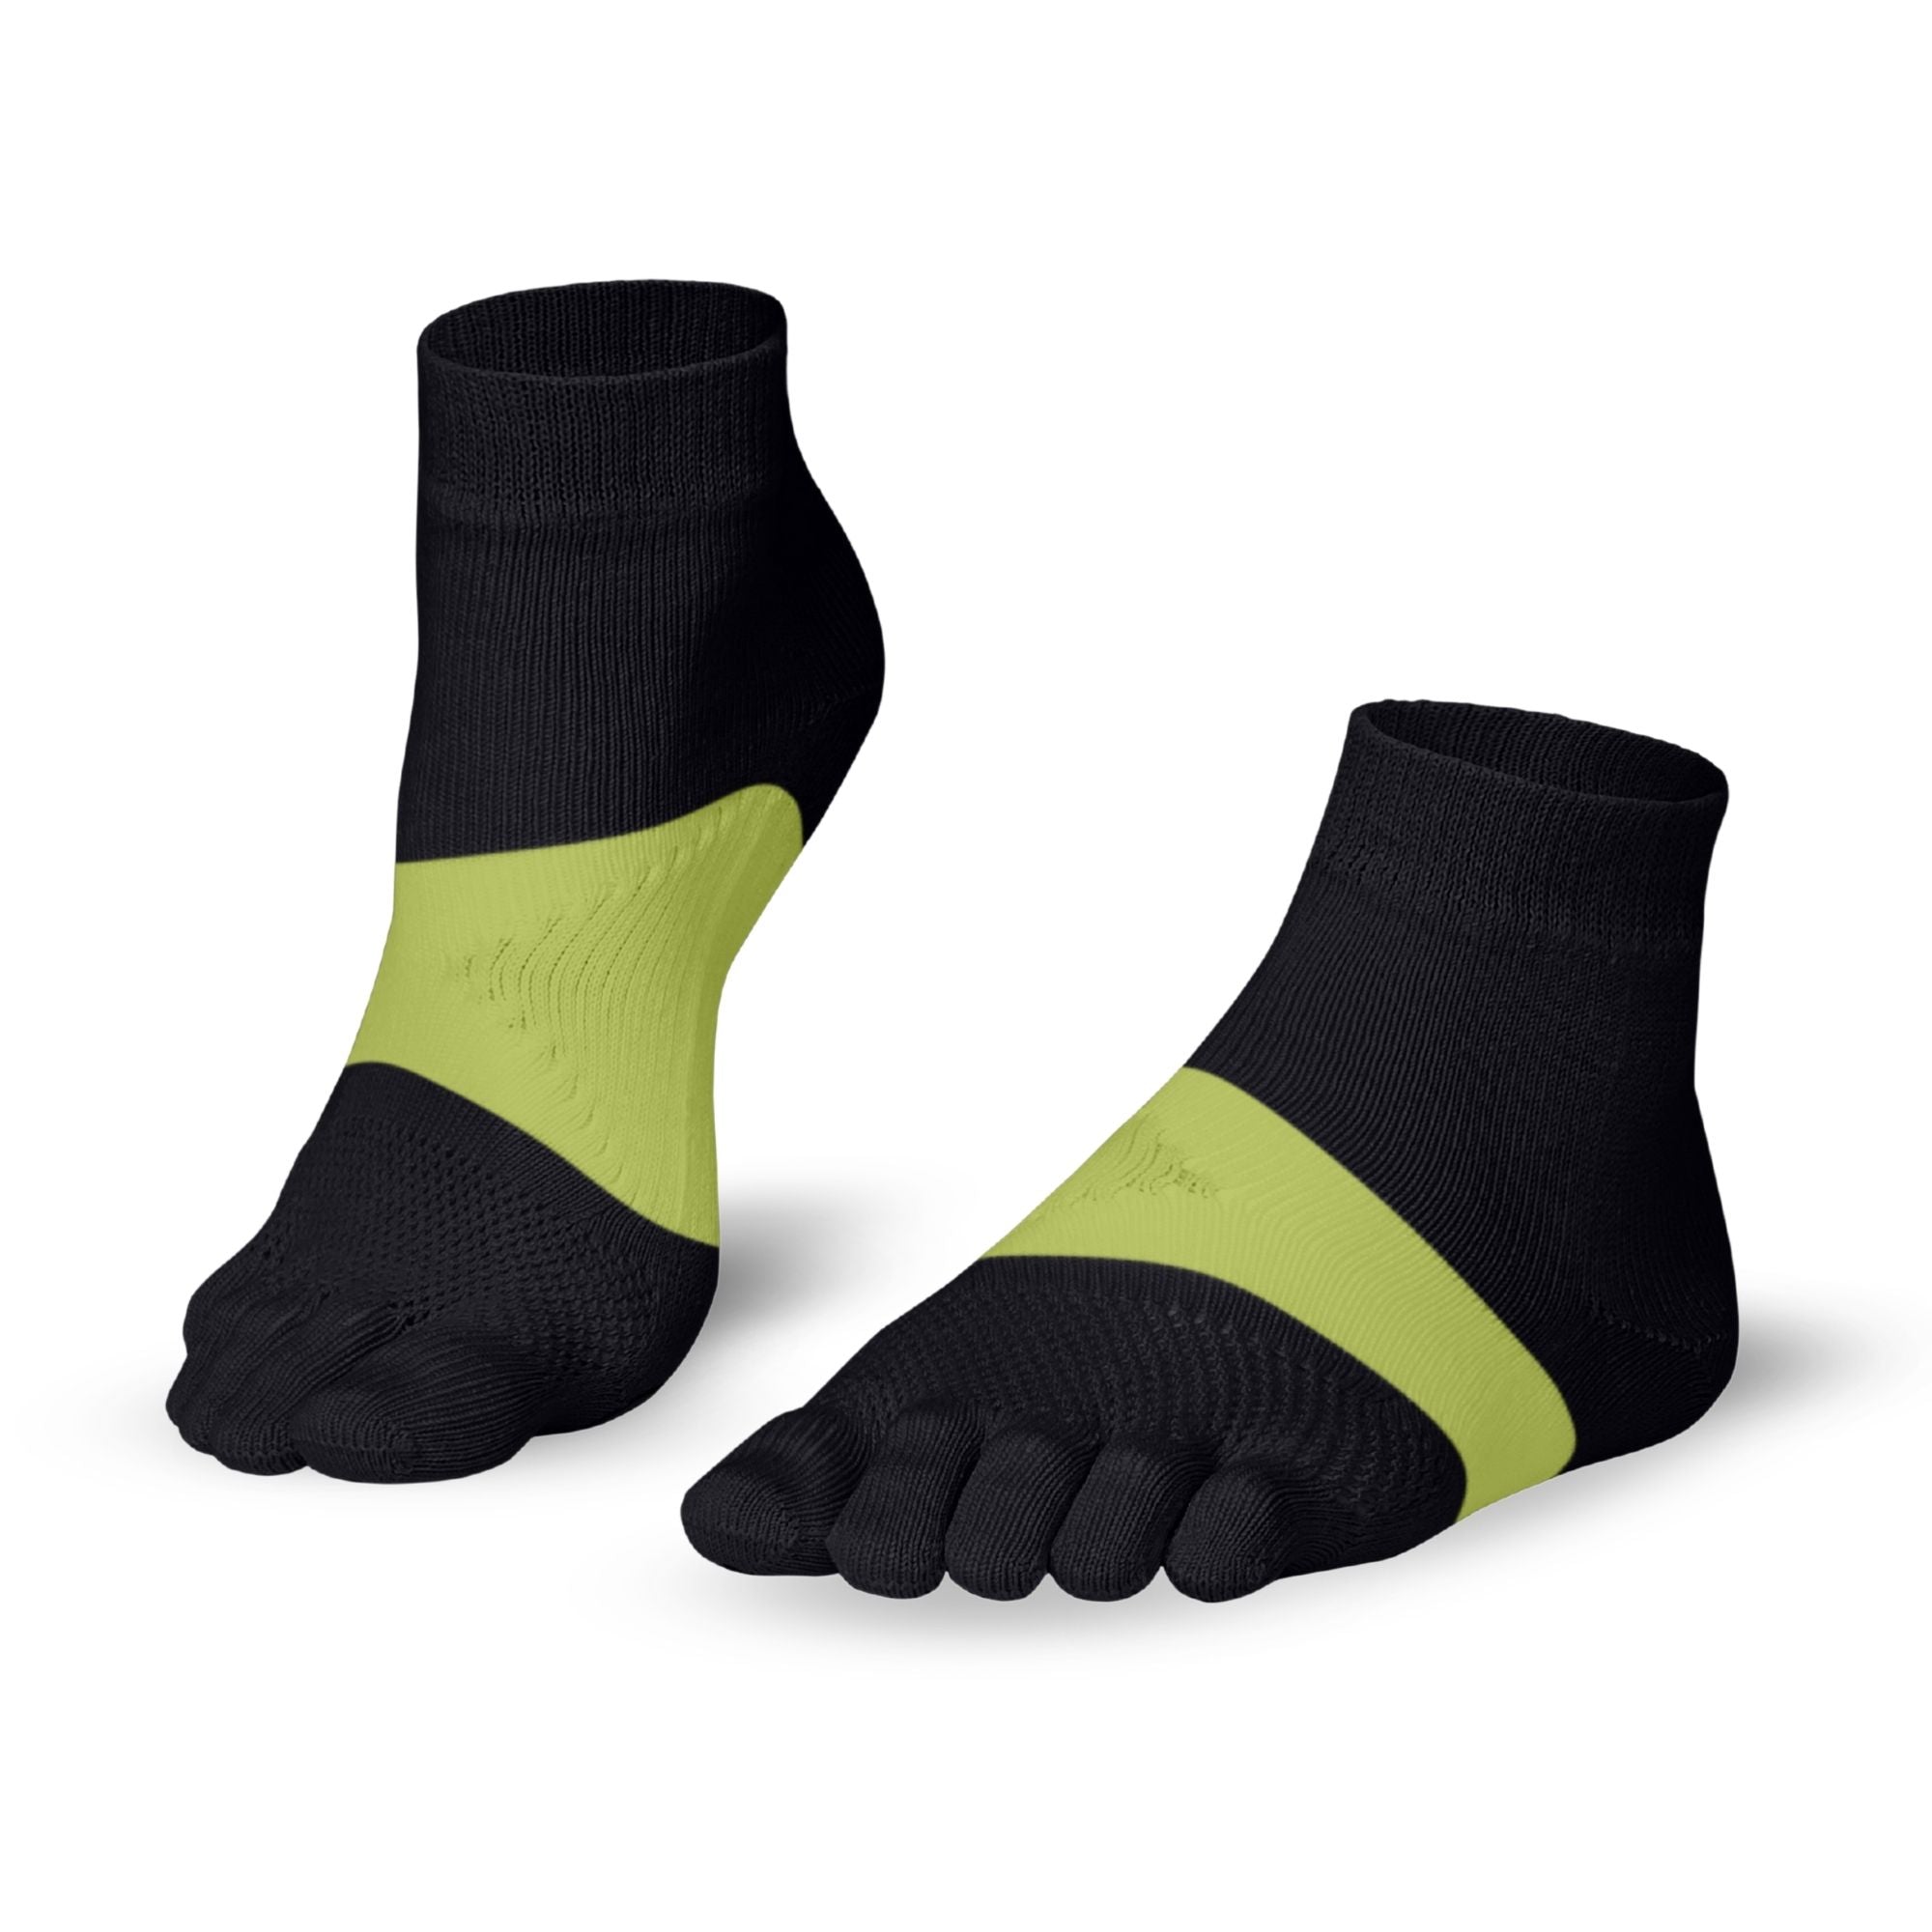 knitido Toe socks 36 41 anti slip sports socks running socks men